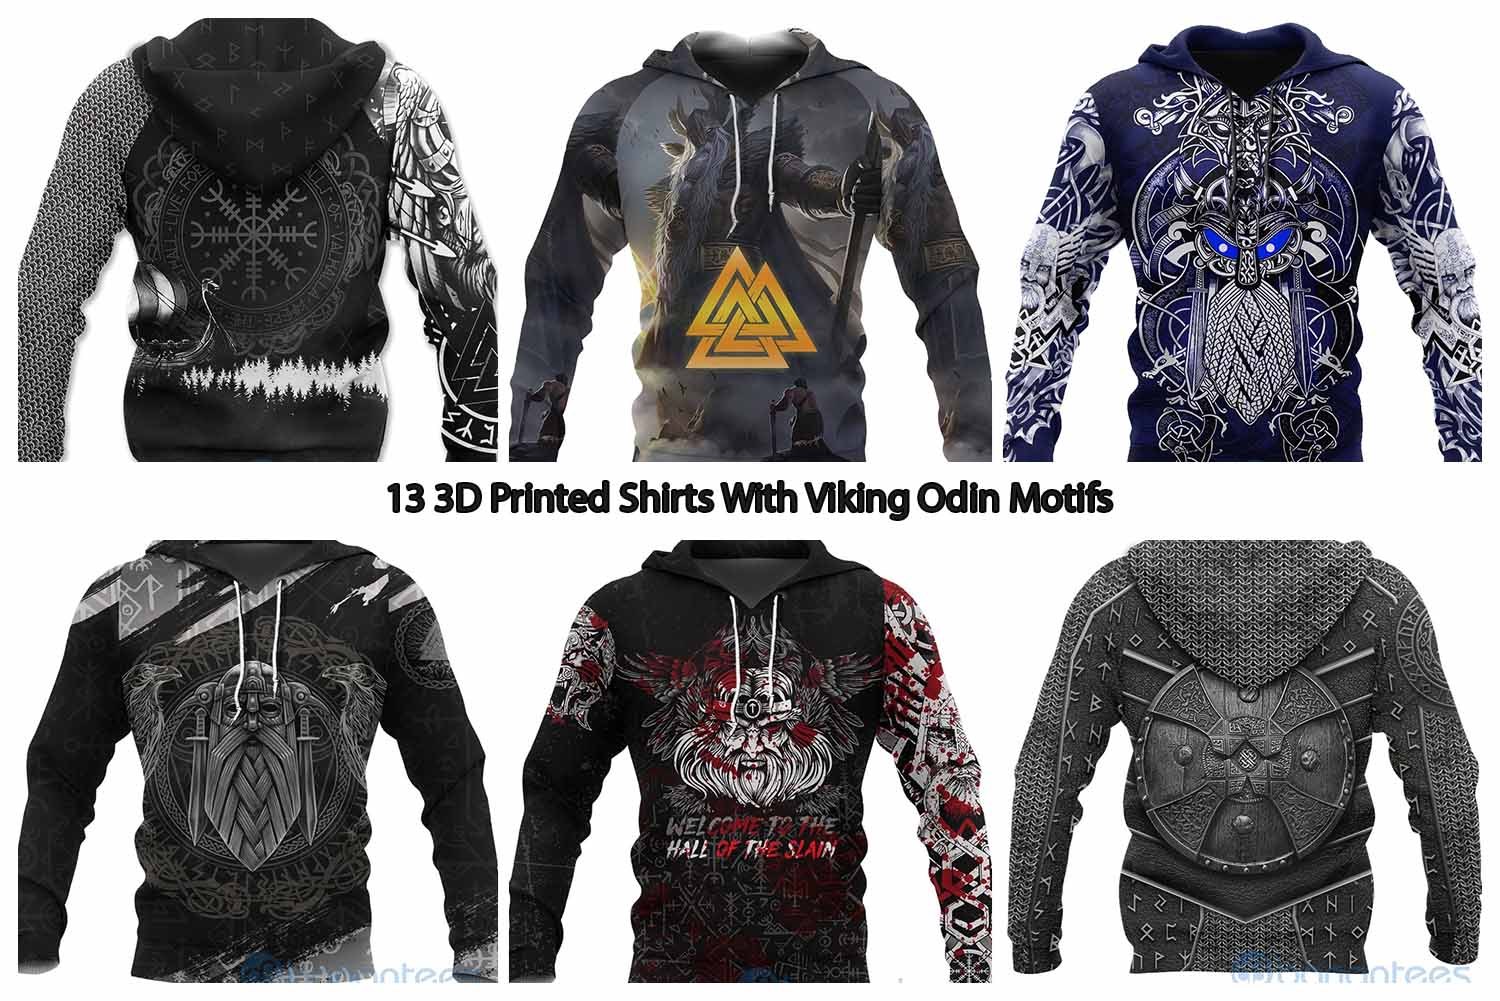 13 3D Printed Shirts With Viking Odin Motifs